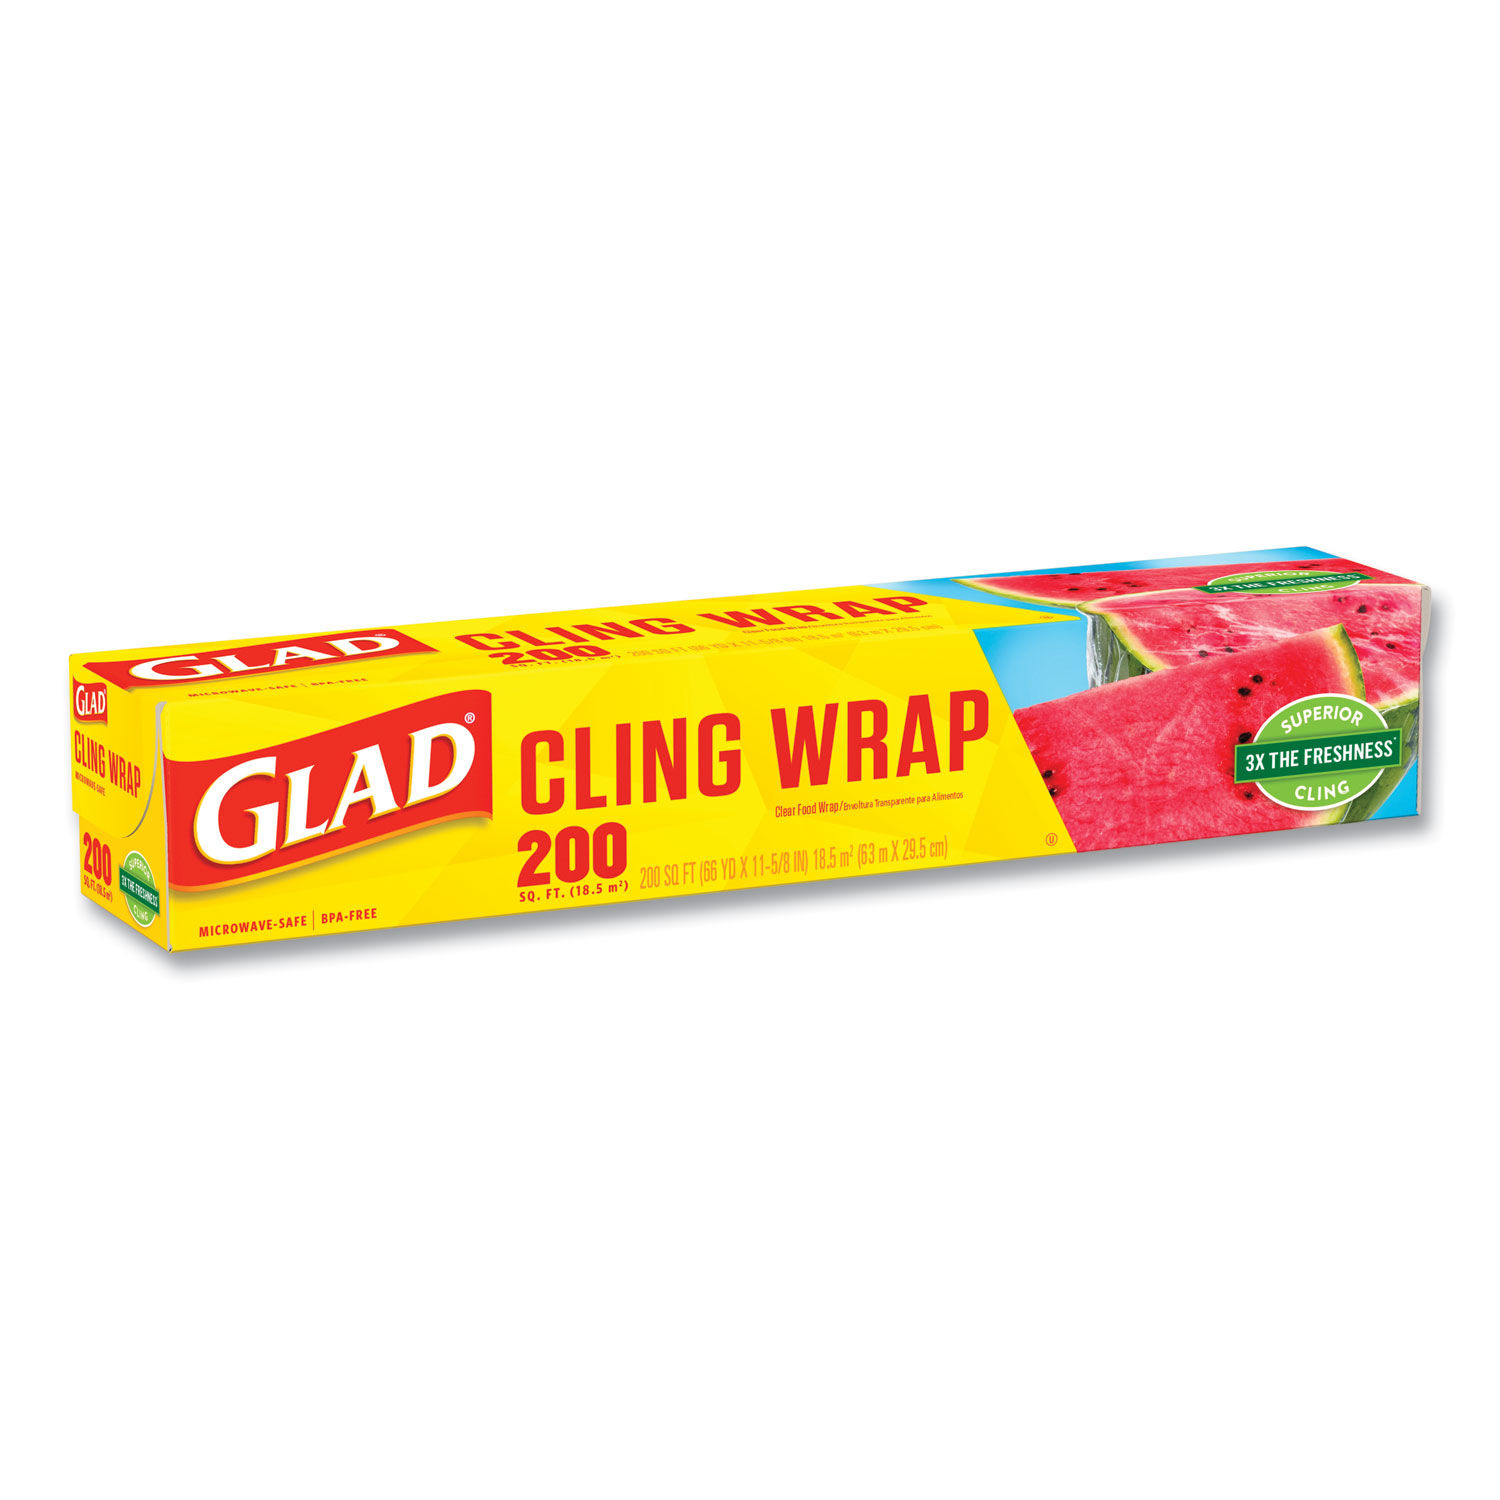 ClingWrap Plastic Wrap, 200 Square Foot Roll, Clear, 12 Rolls